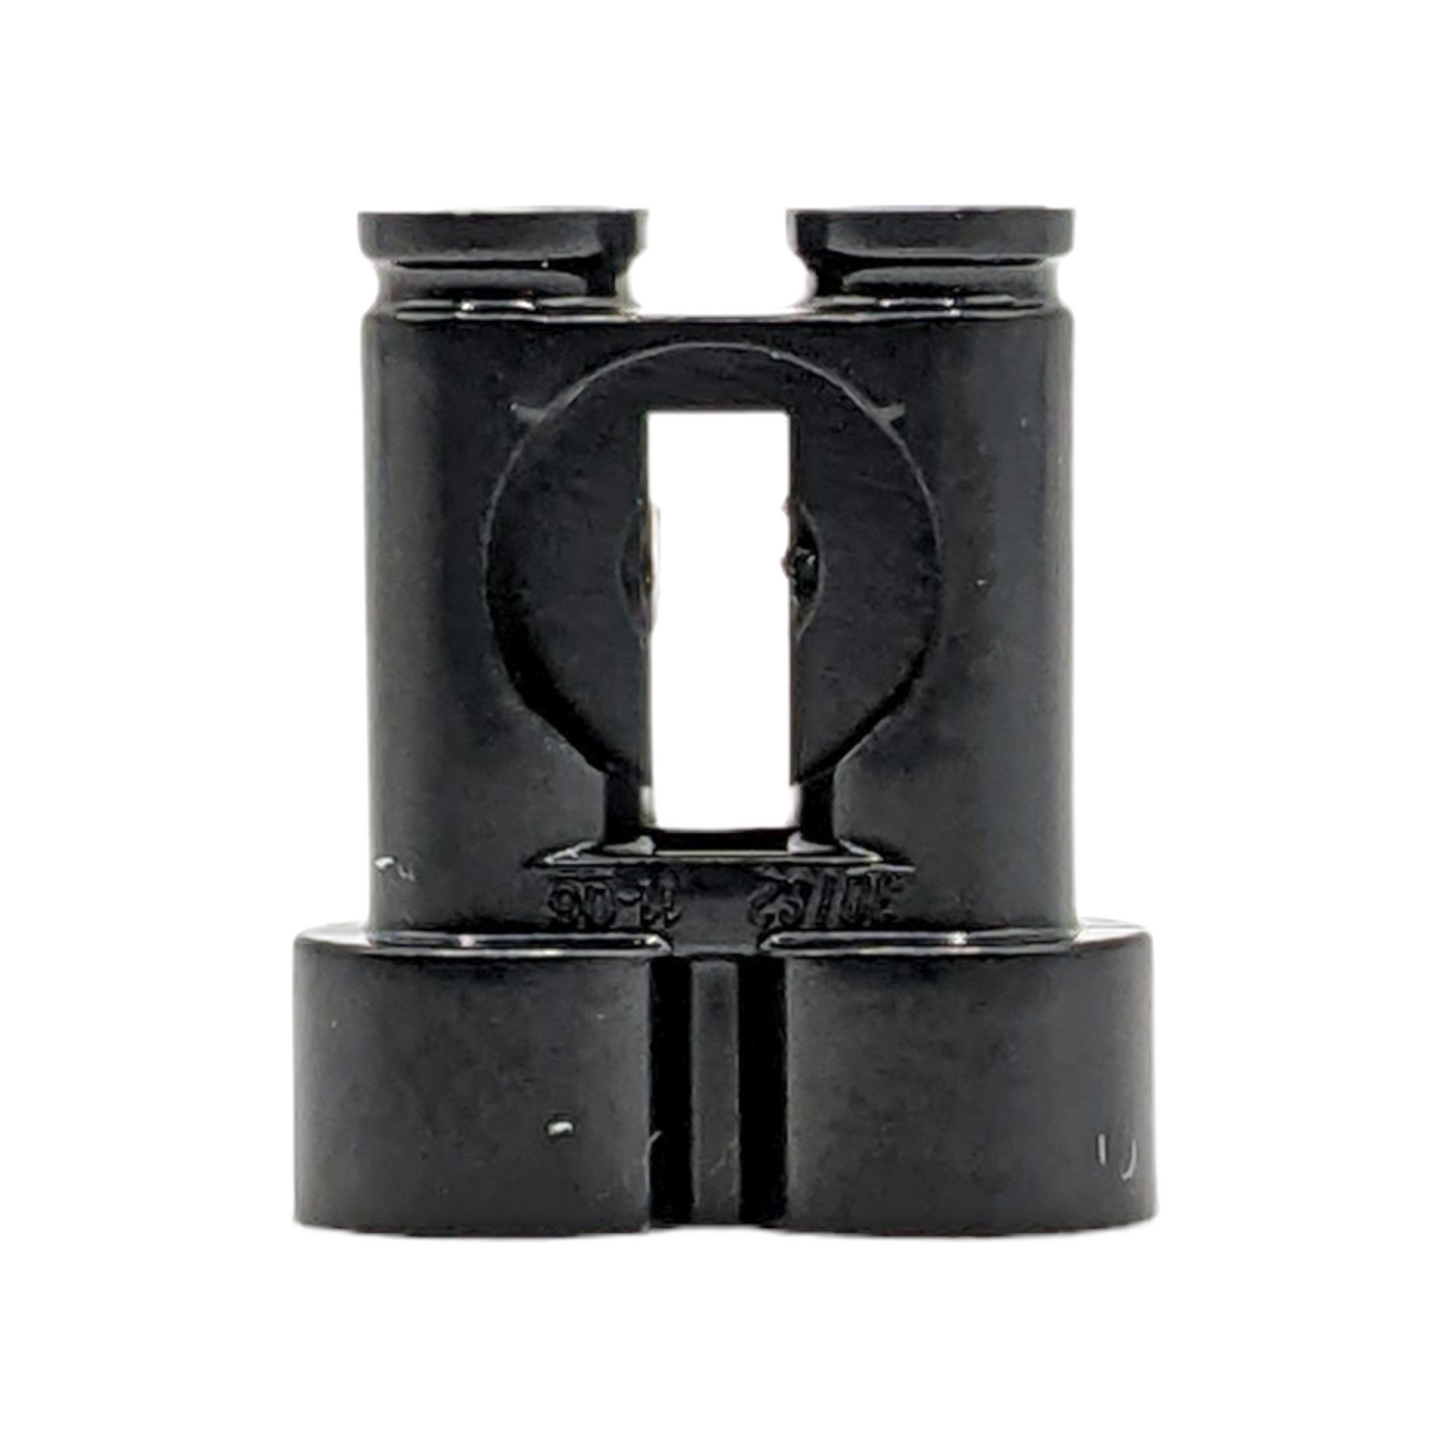 LEGO Binoculars - Fernglas in Black